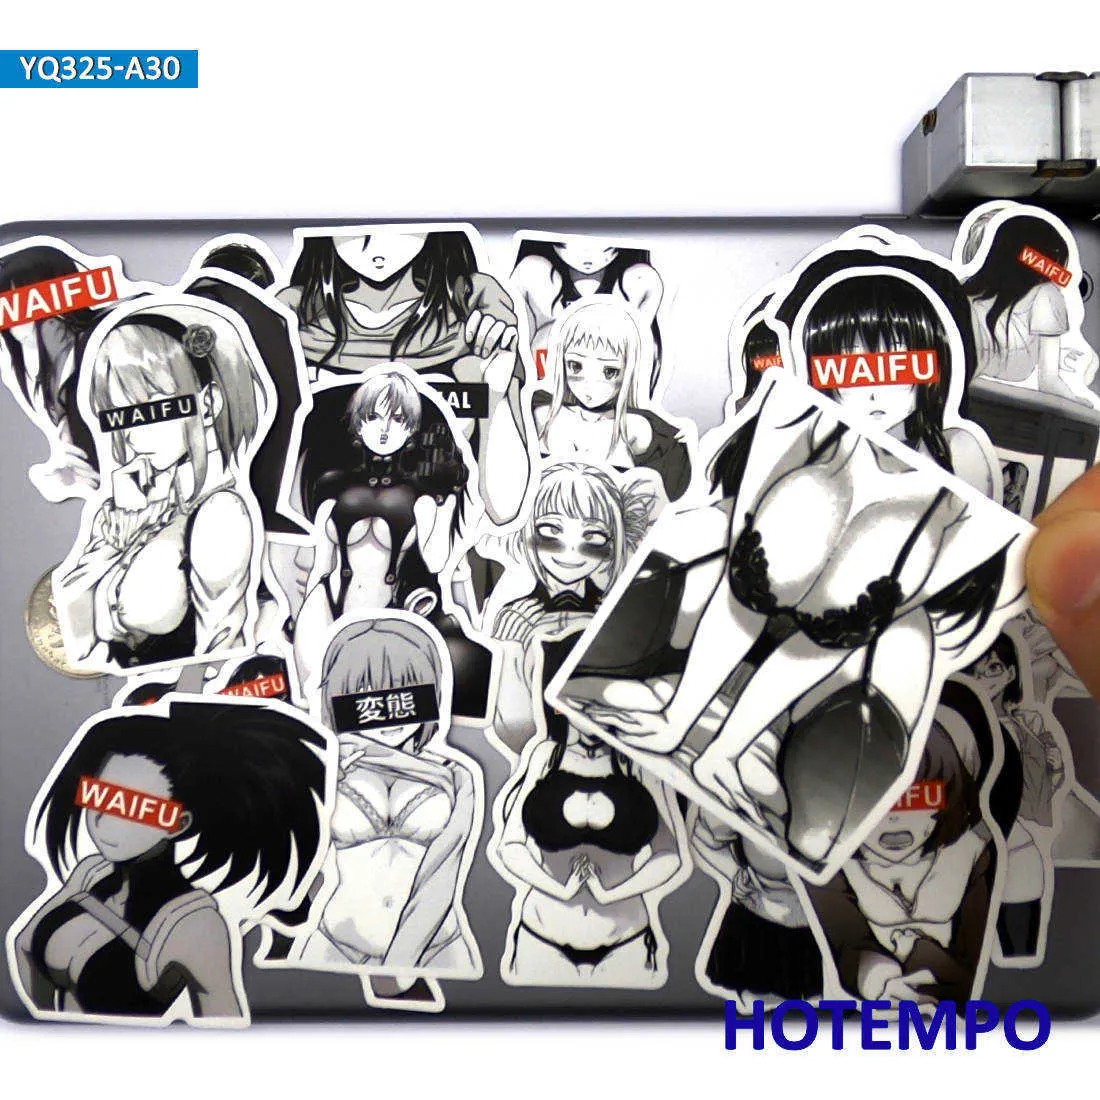 Anime Sexy Girls Black White Manga Otaku Waifu Telefone Laptop Adesivos para Notebooks Skateboard Motorcycle Bike Sticker CA7321377